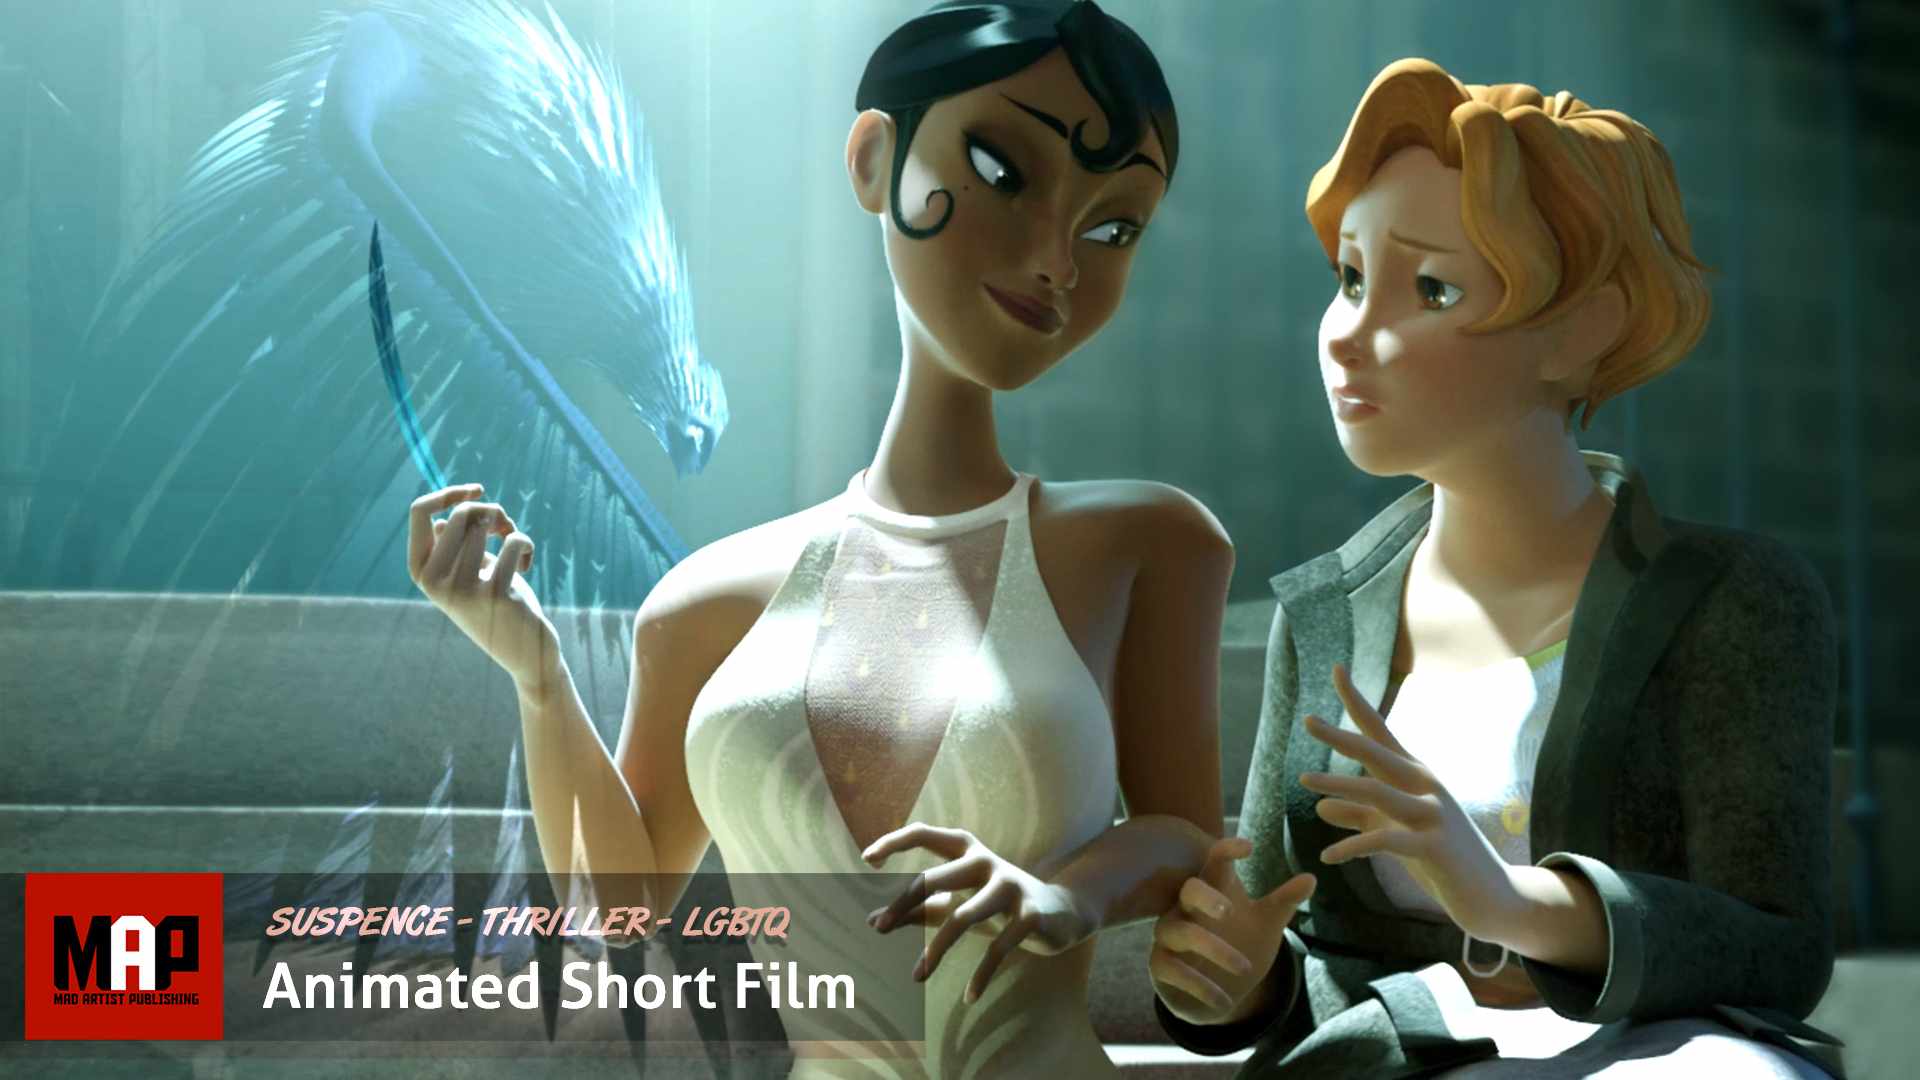 CGI 3d Animated Short Film ** TENTATRICE ** Suspence Thriller Animation by ISART Digital Team